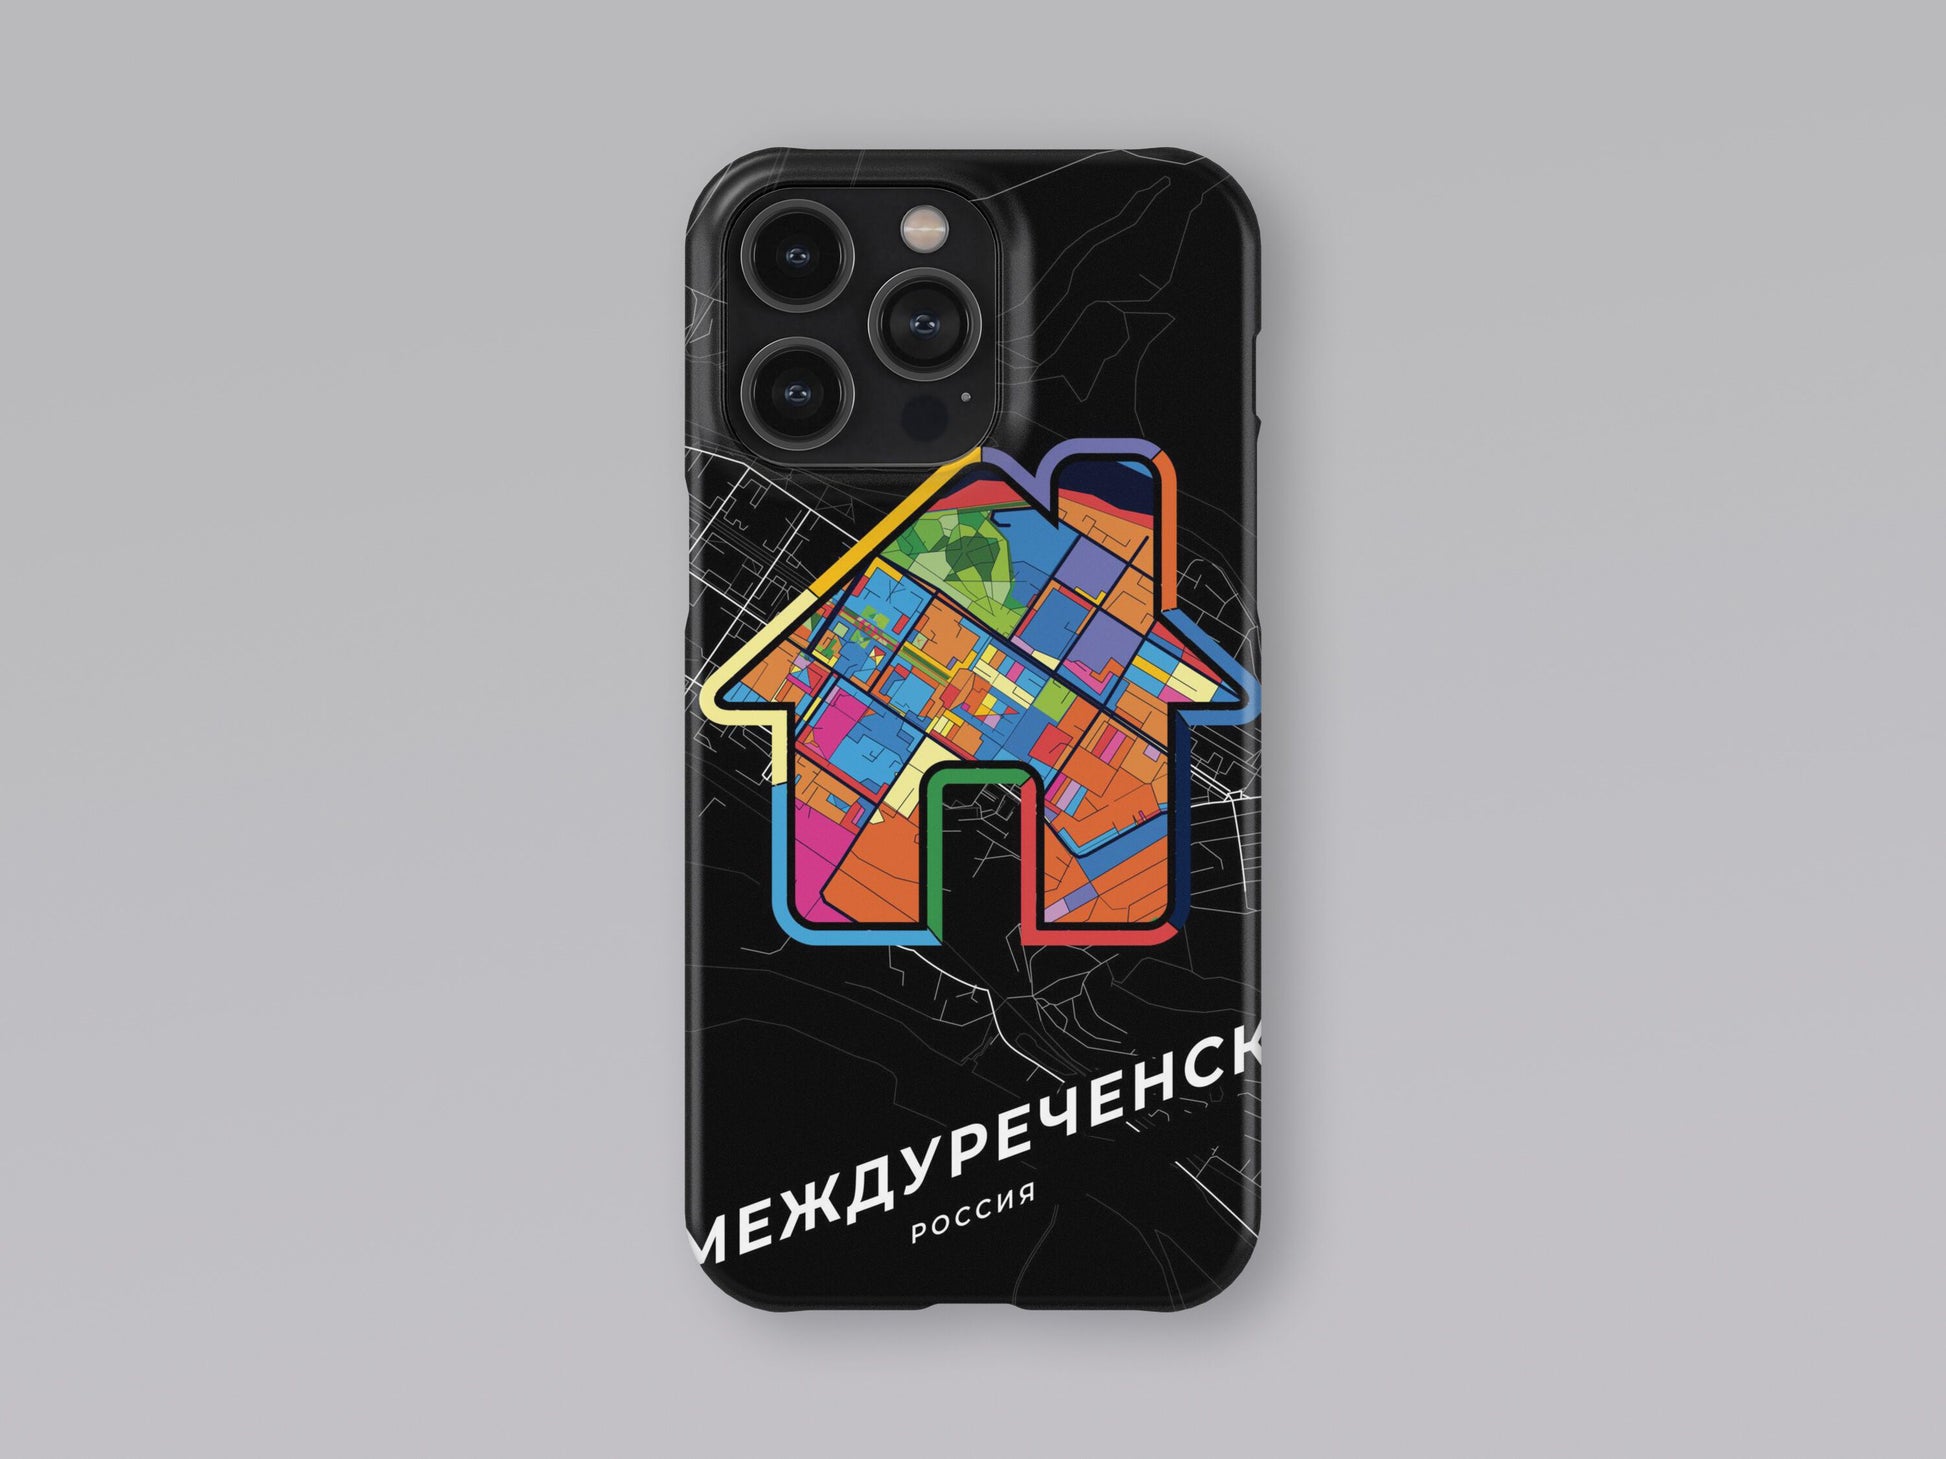 Mezhdurechensk Russia slim phone case with colorful icon 3